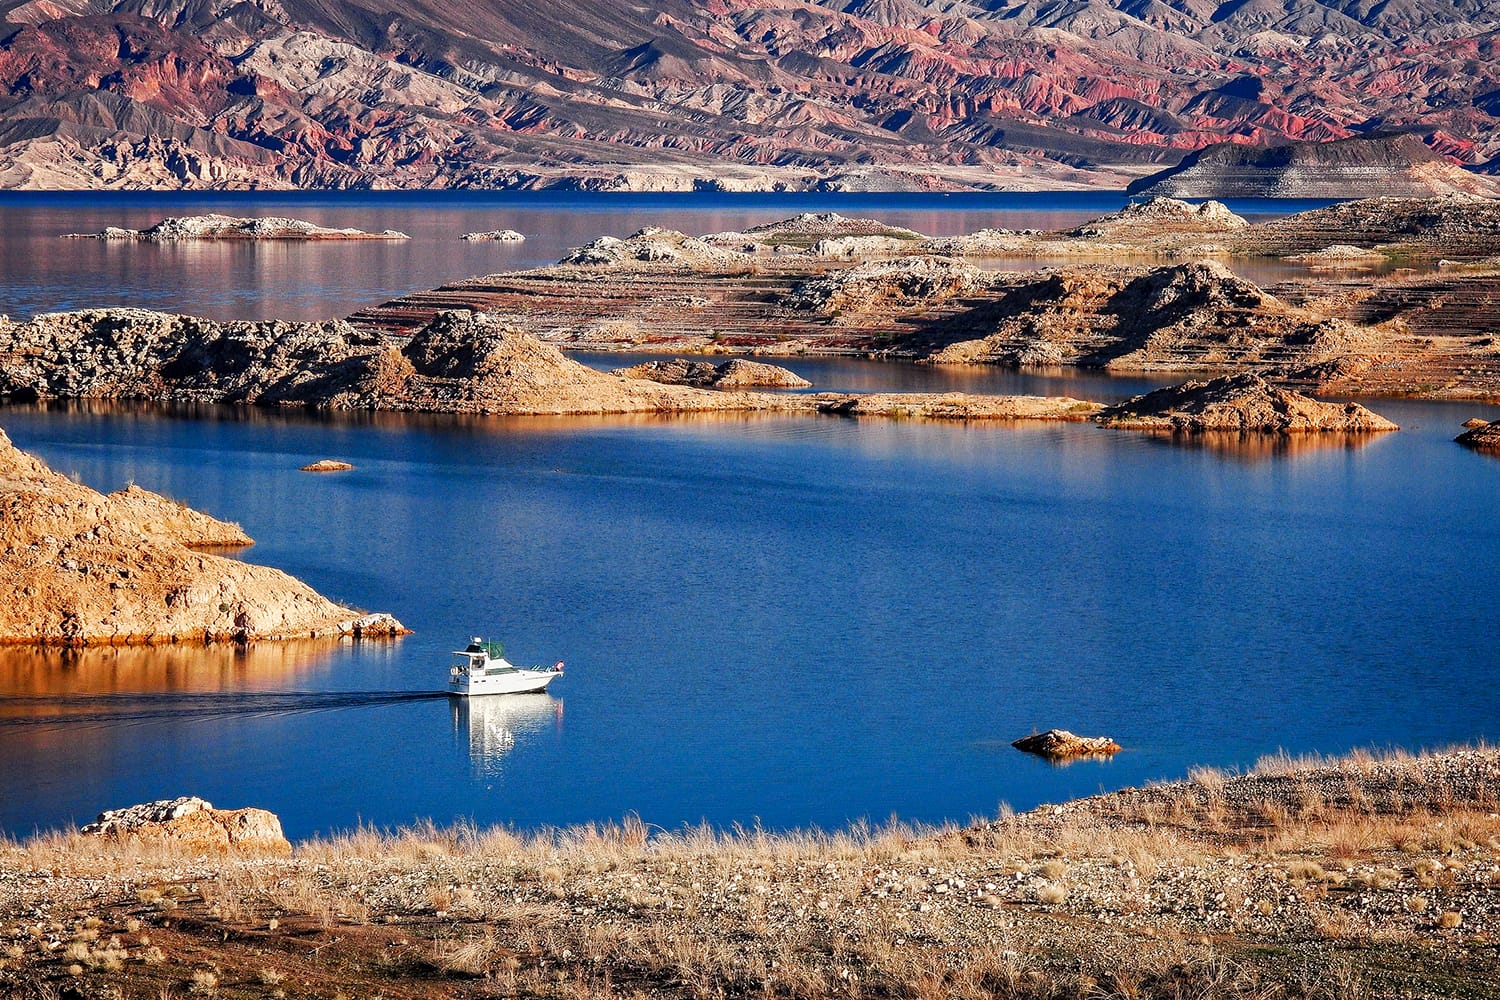 A powerboat cruising on Lake Mead, Arizona, USA